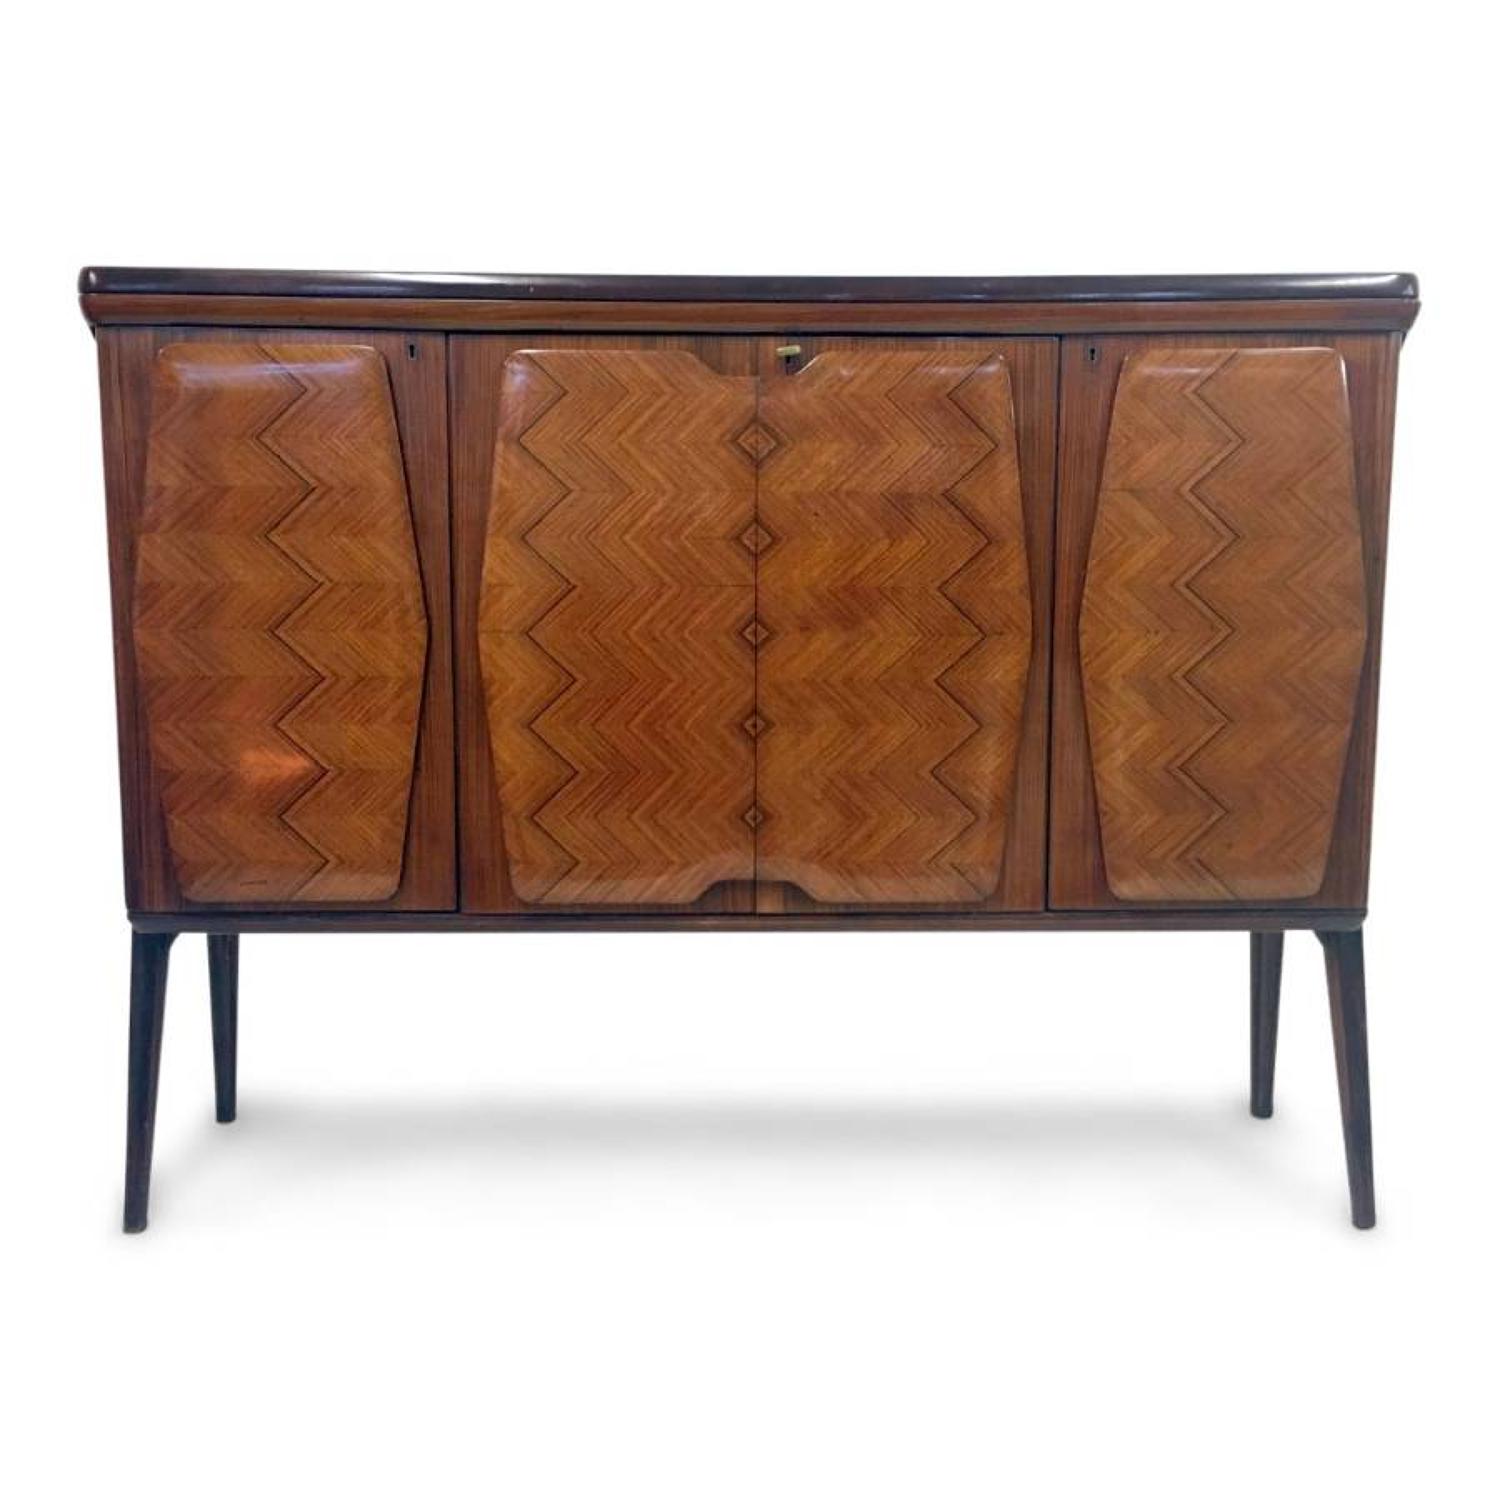 1950s Italian rosewood cabinet or sideboard